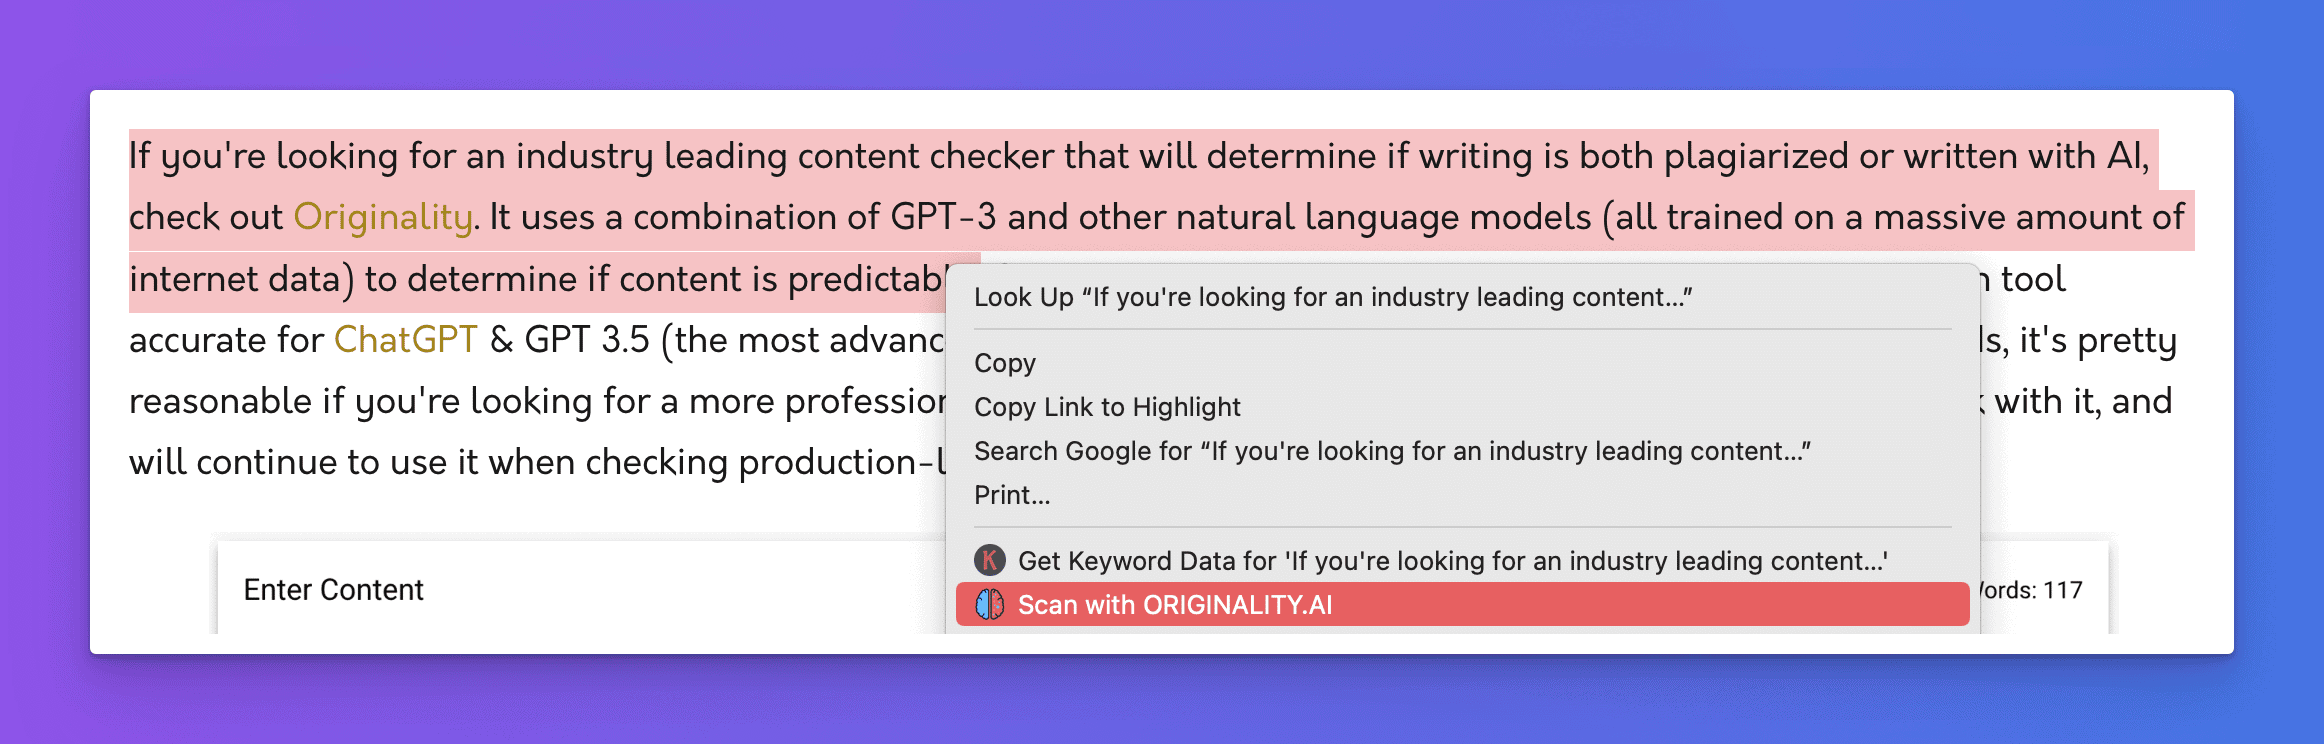 Right click menu screen for Originality.ai Chrome extension - scanning AI content option